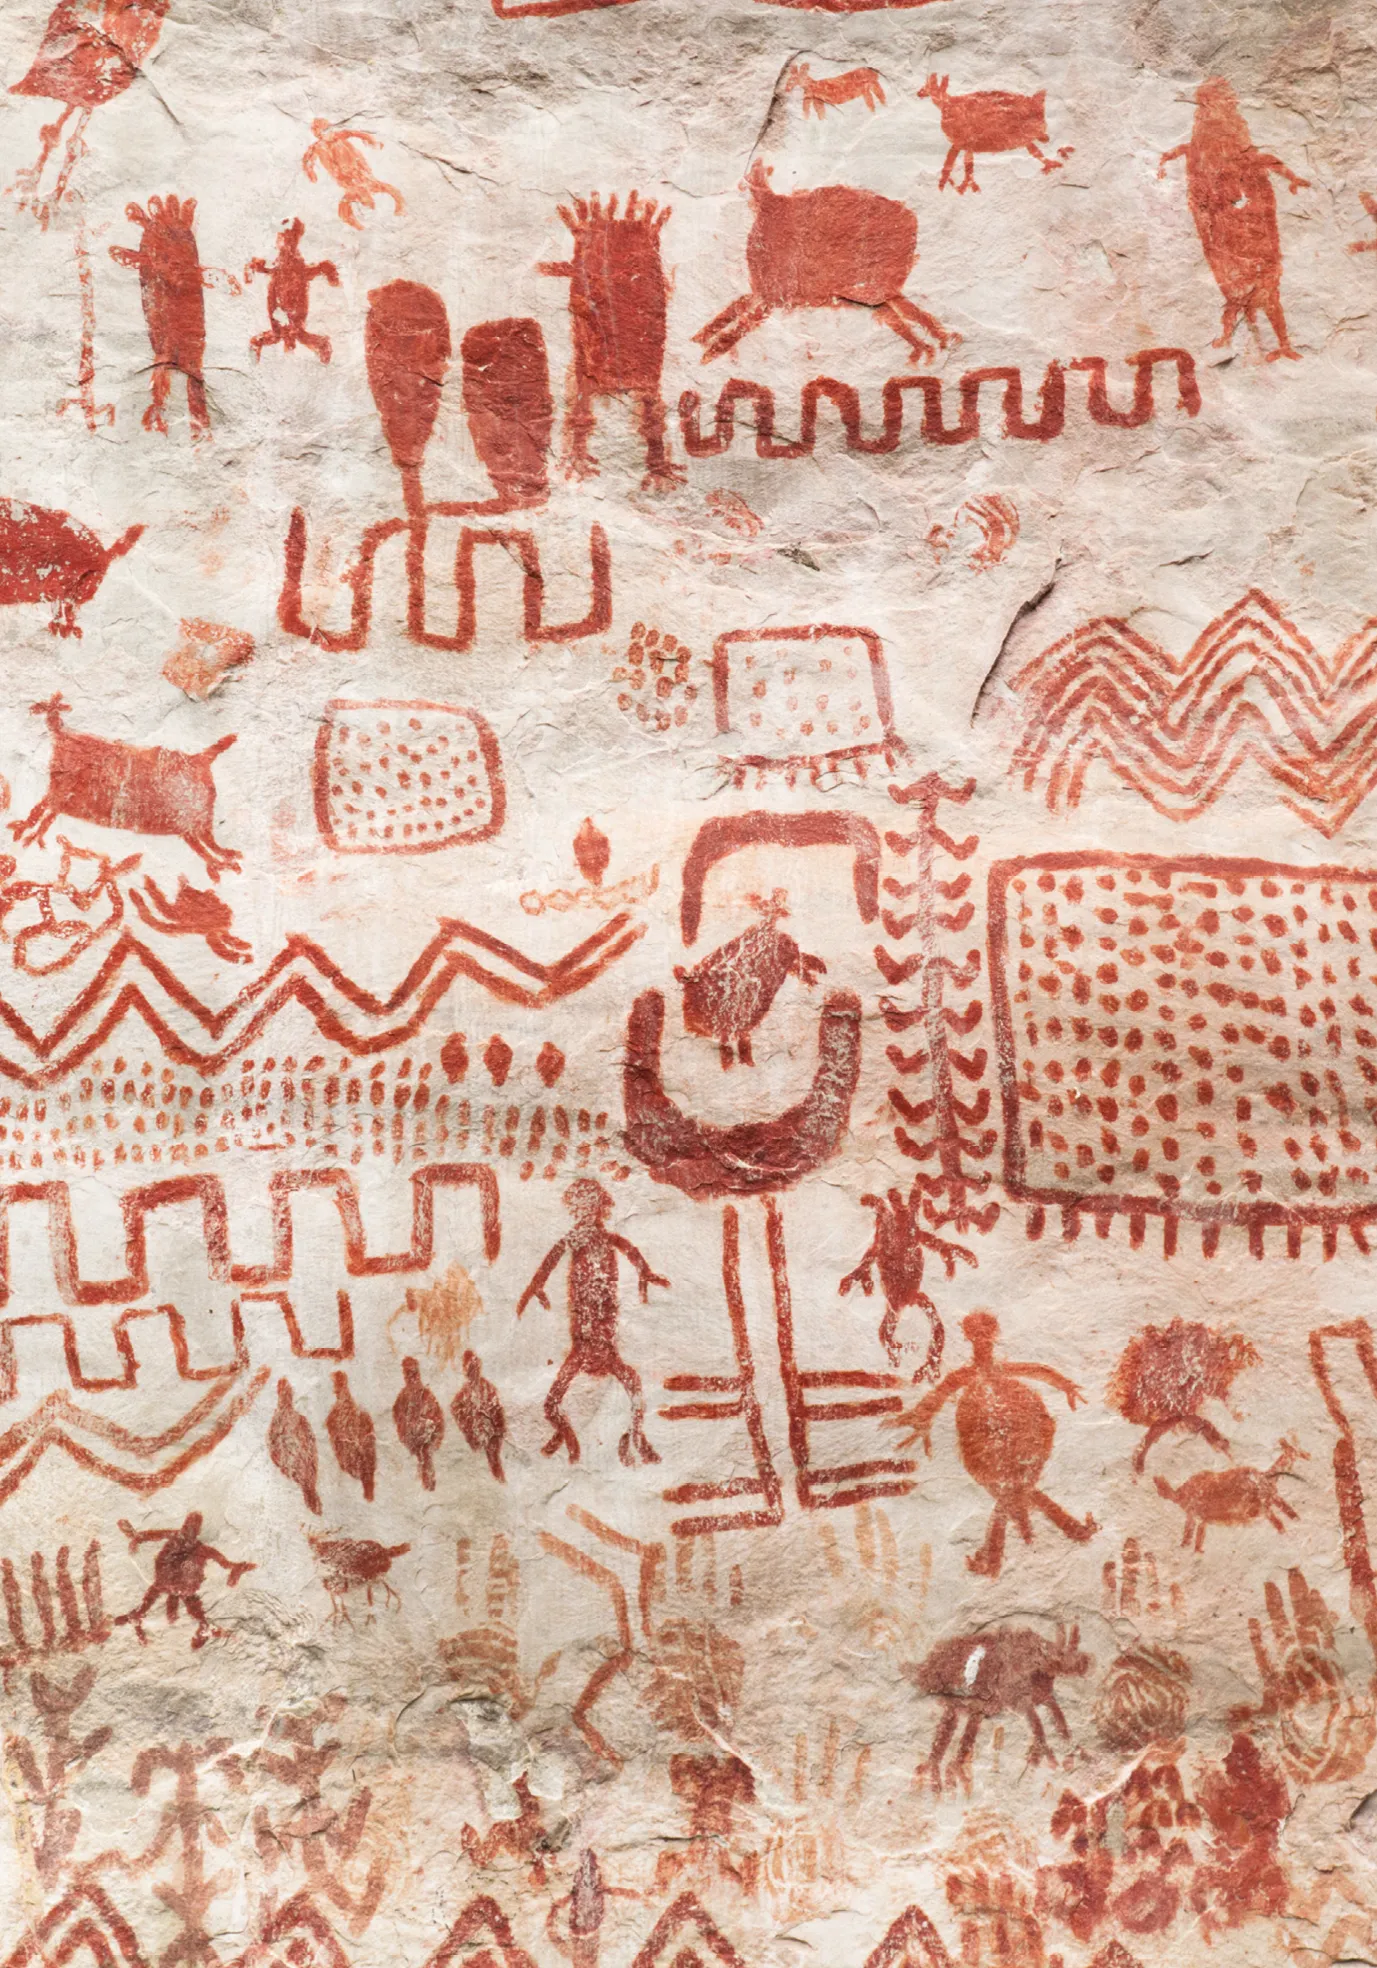 Peintures rupestres en Amazonie